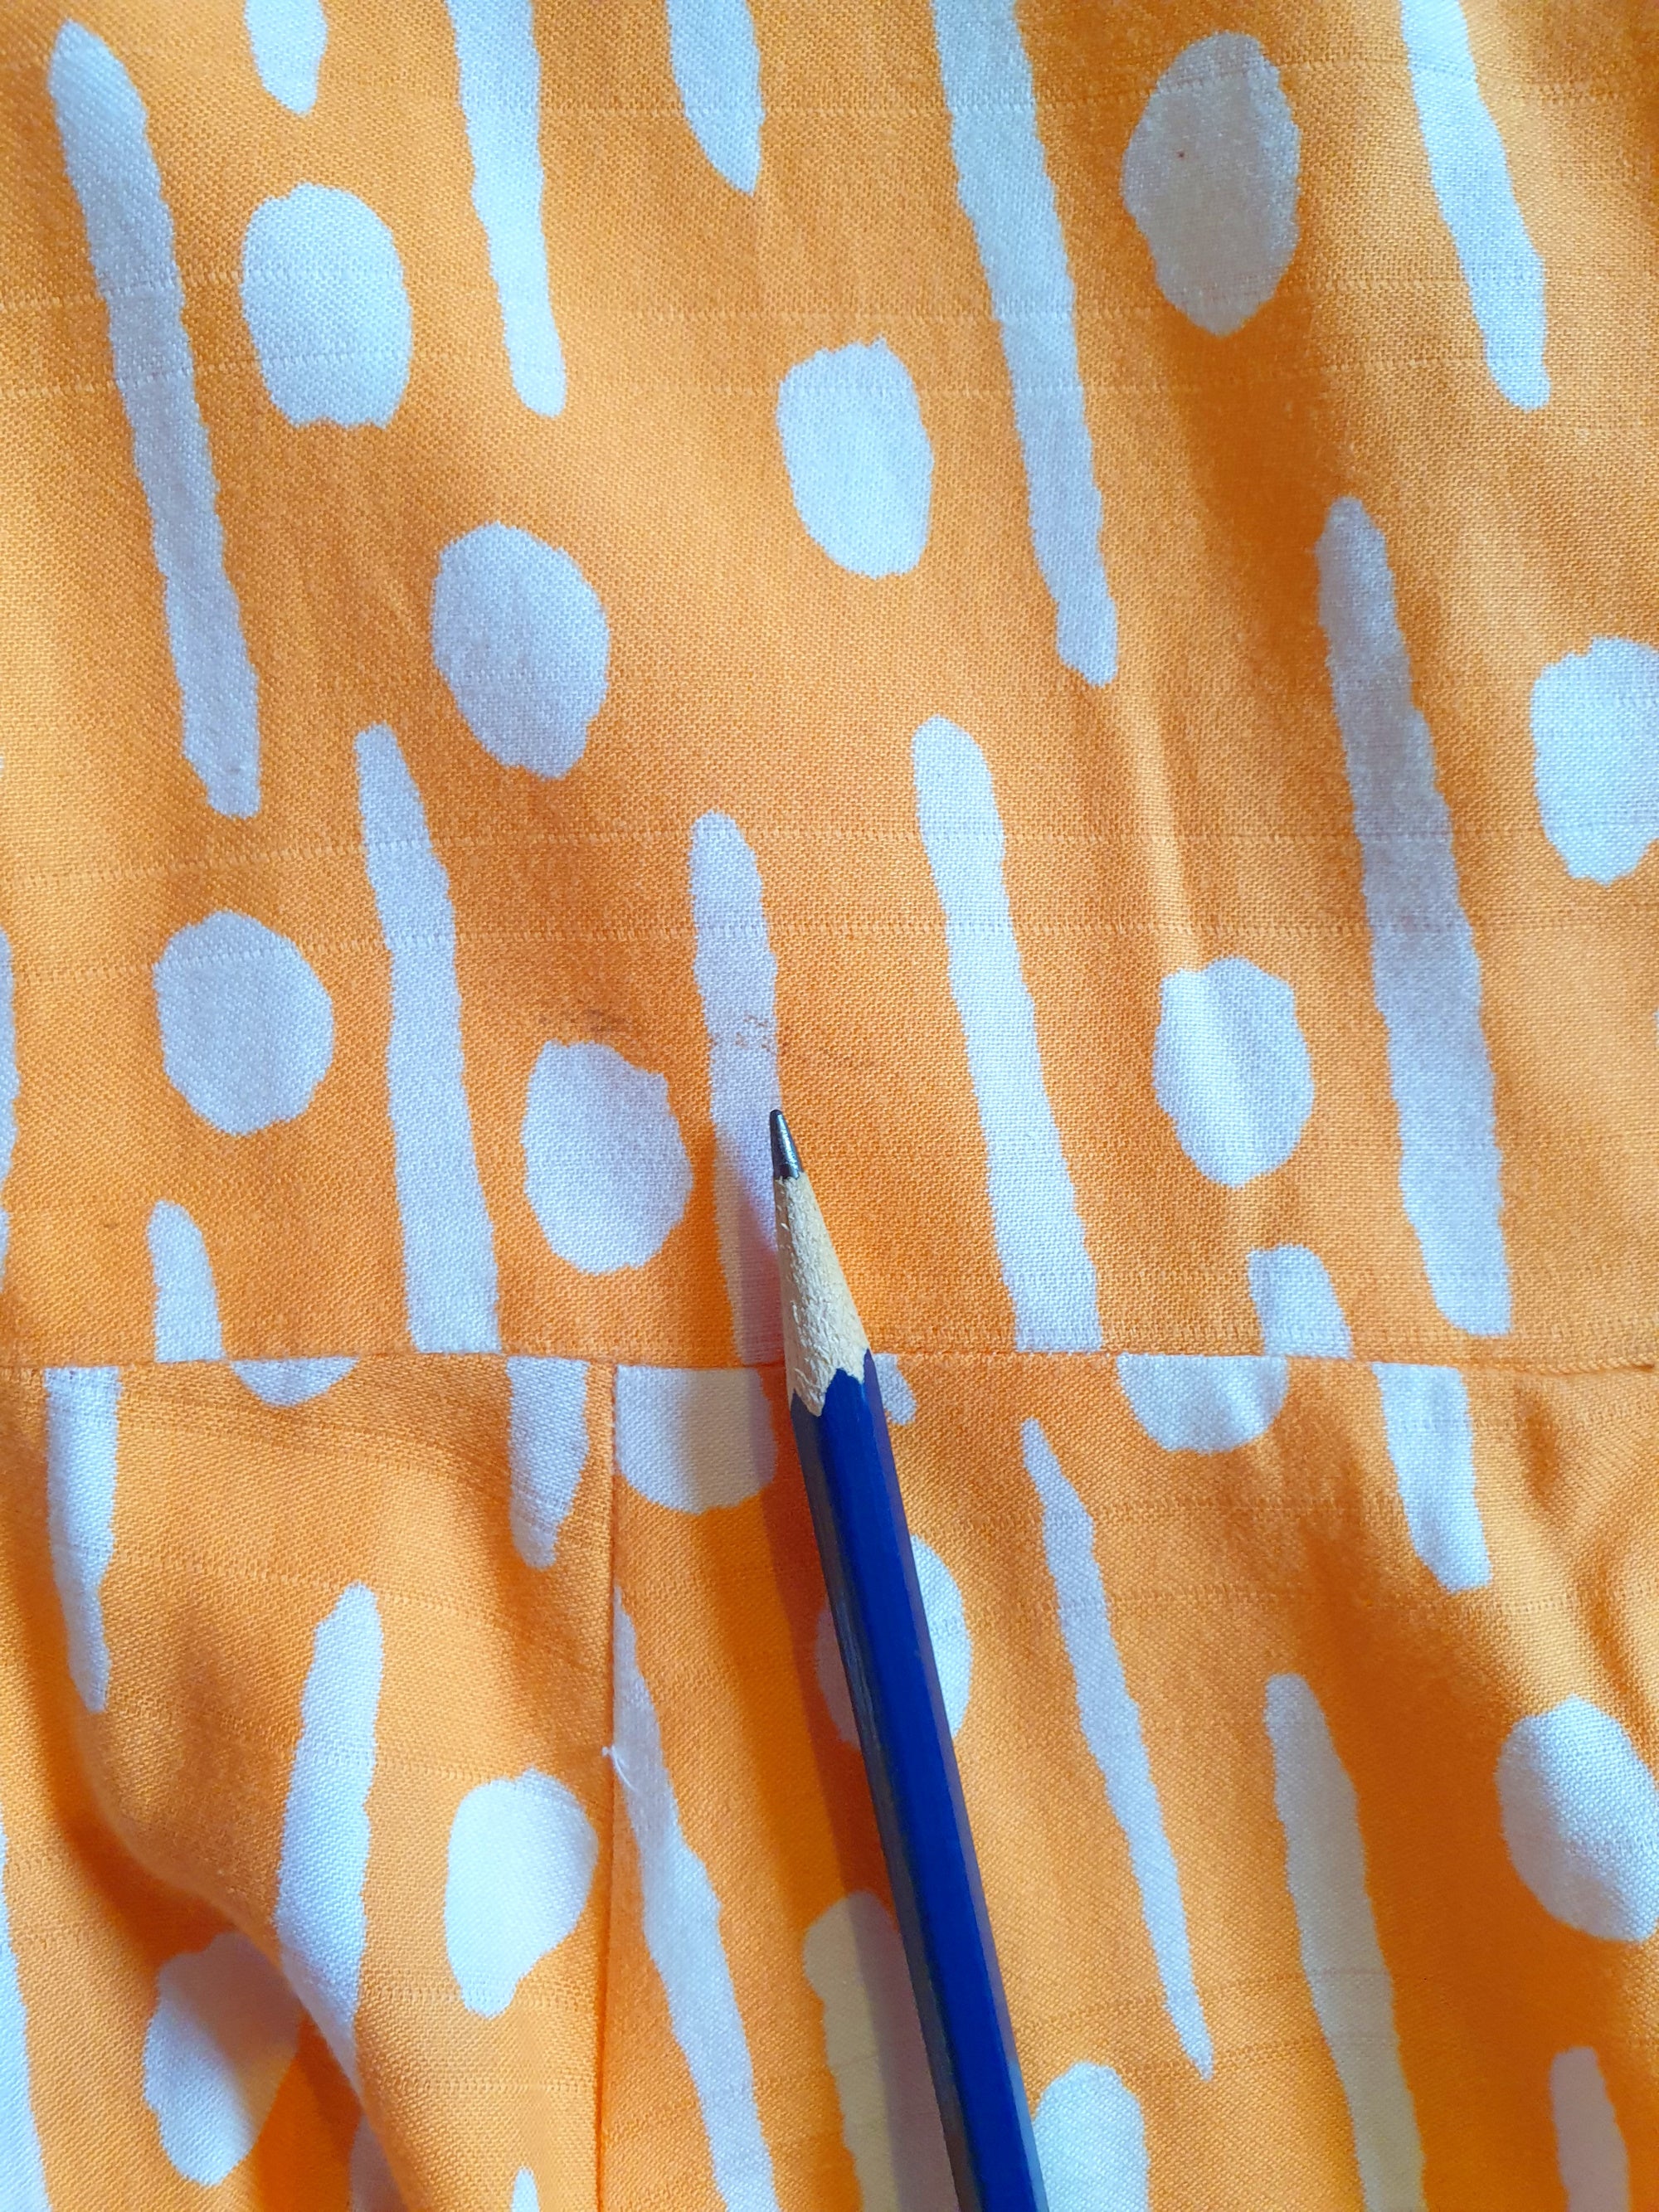 1960s vintage orange and white polka dot cotton dress medium